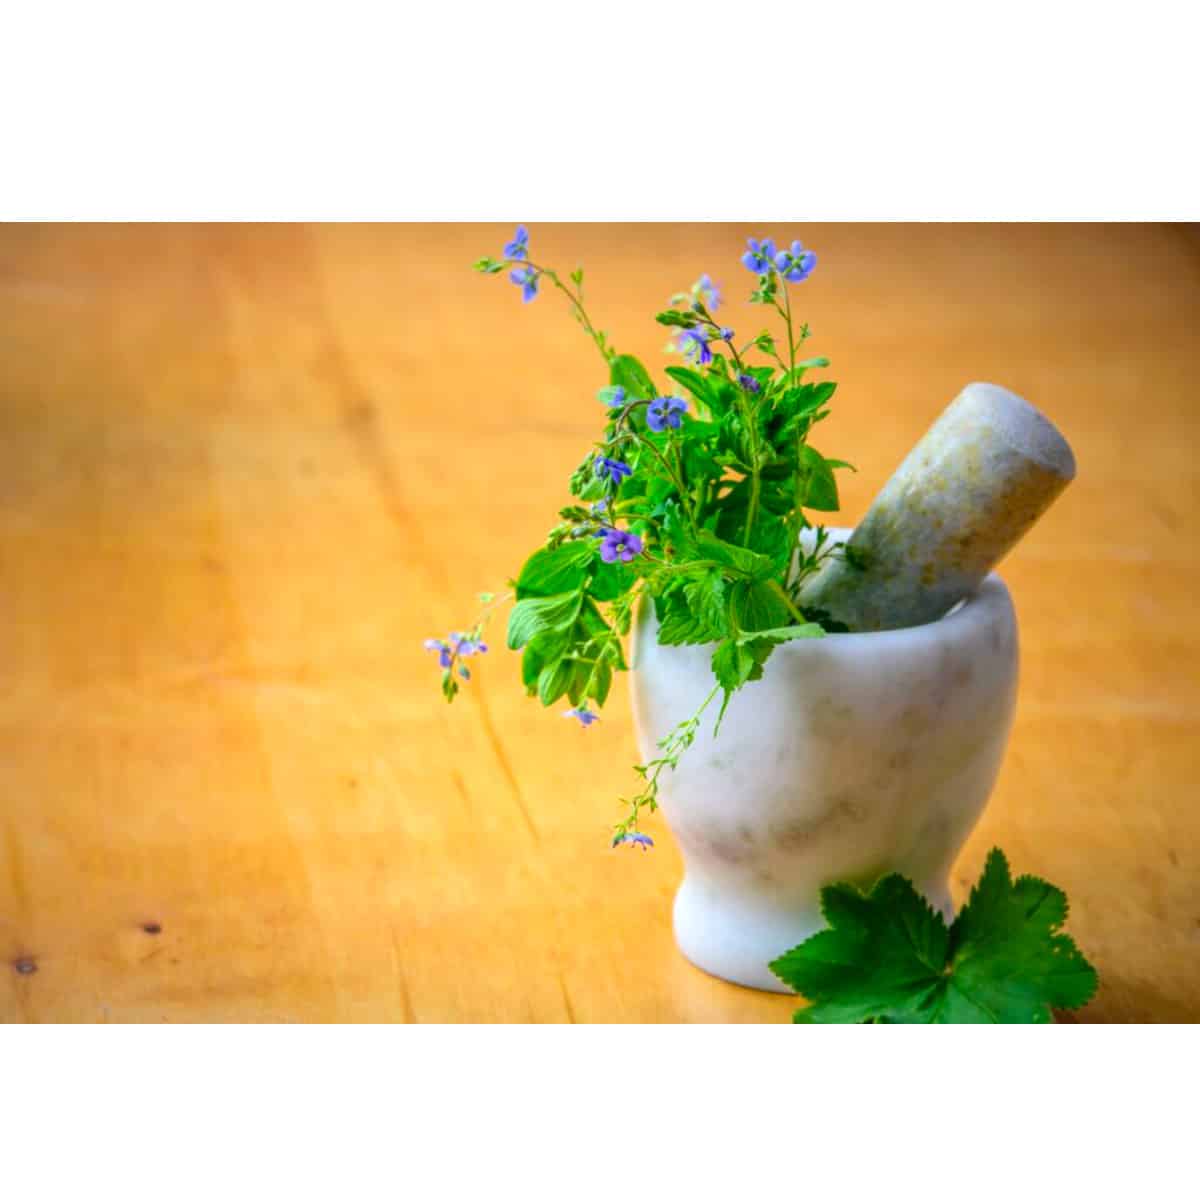 olive leaf herbal preparation in a decorative form